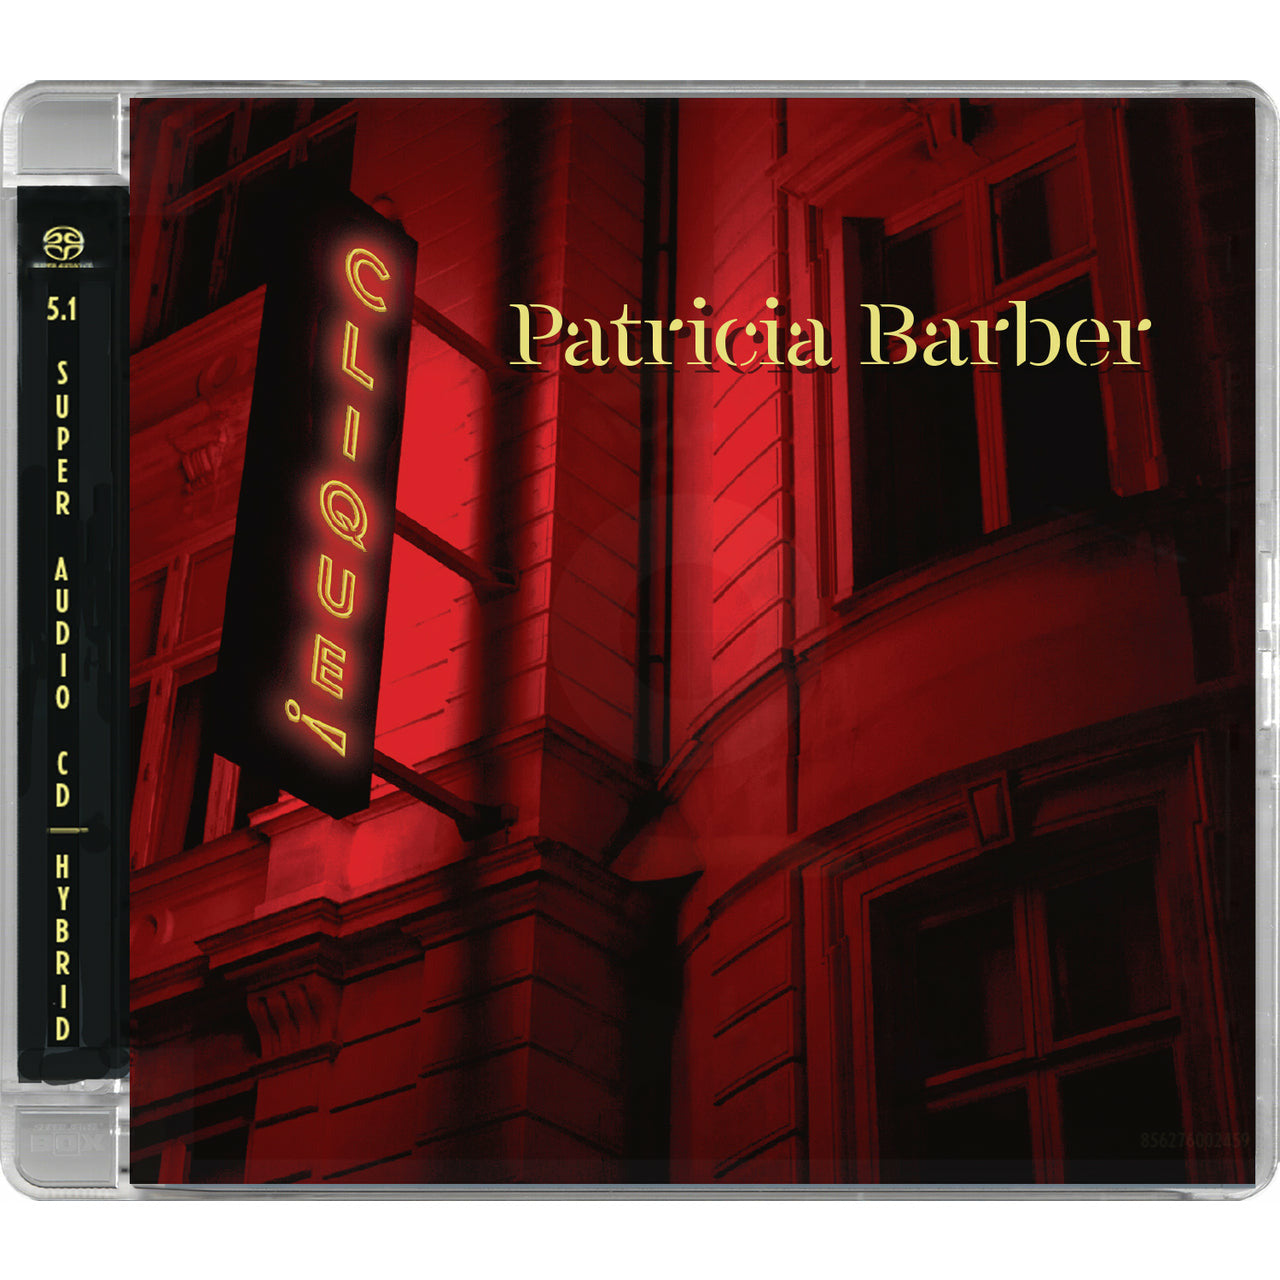 Patricia Barber Clique Hybrid Multi-Channel &amp; Stereo - SACD 